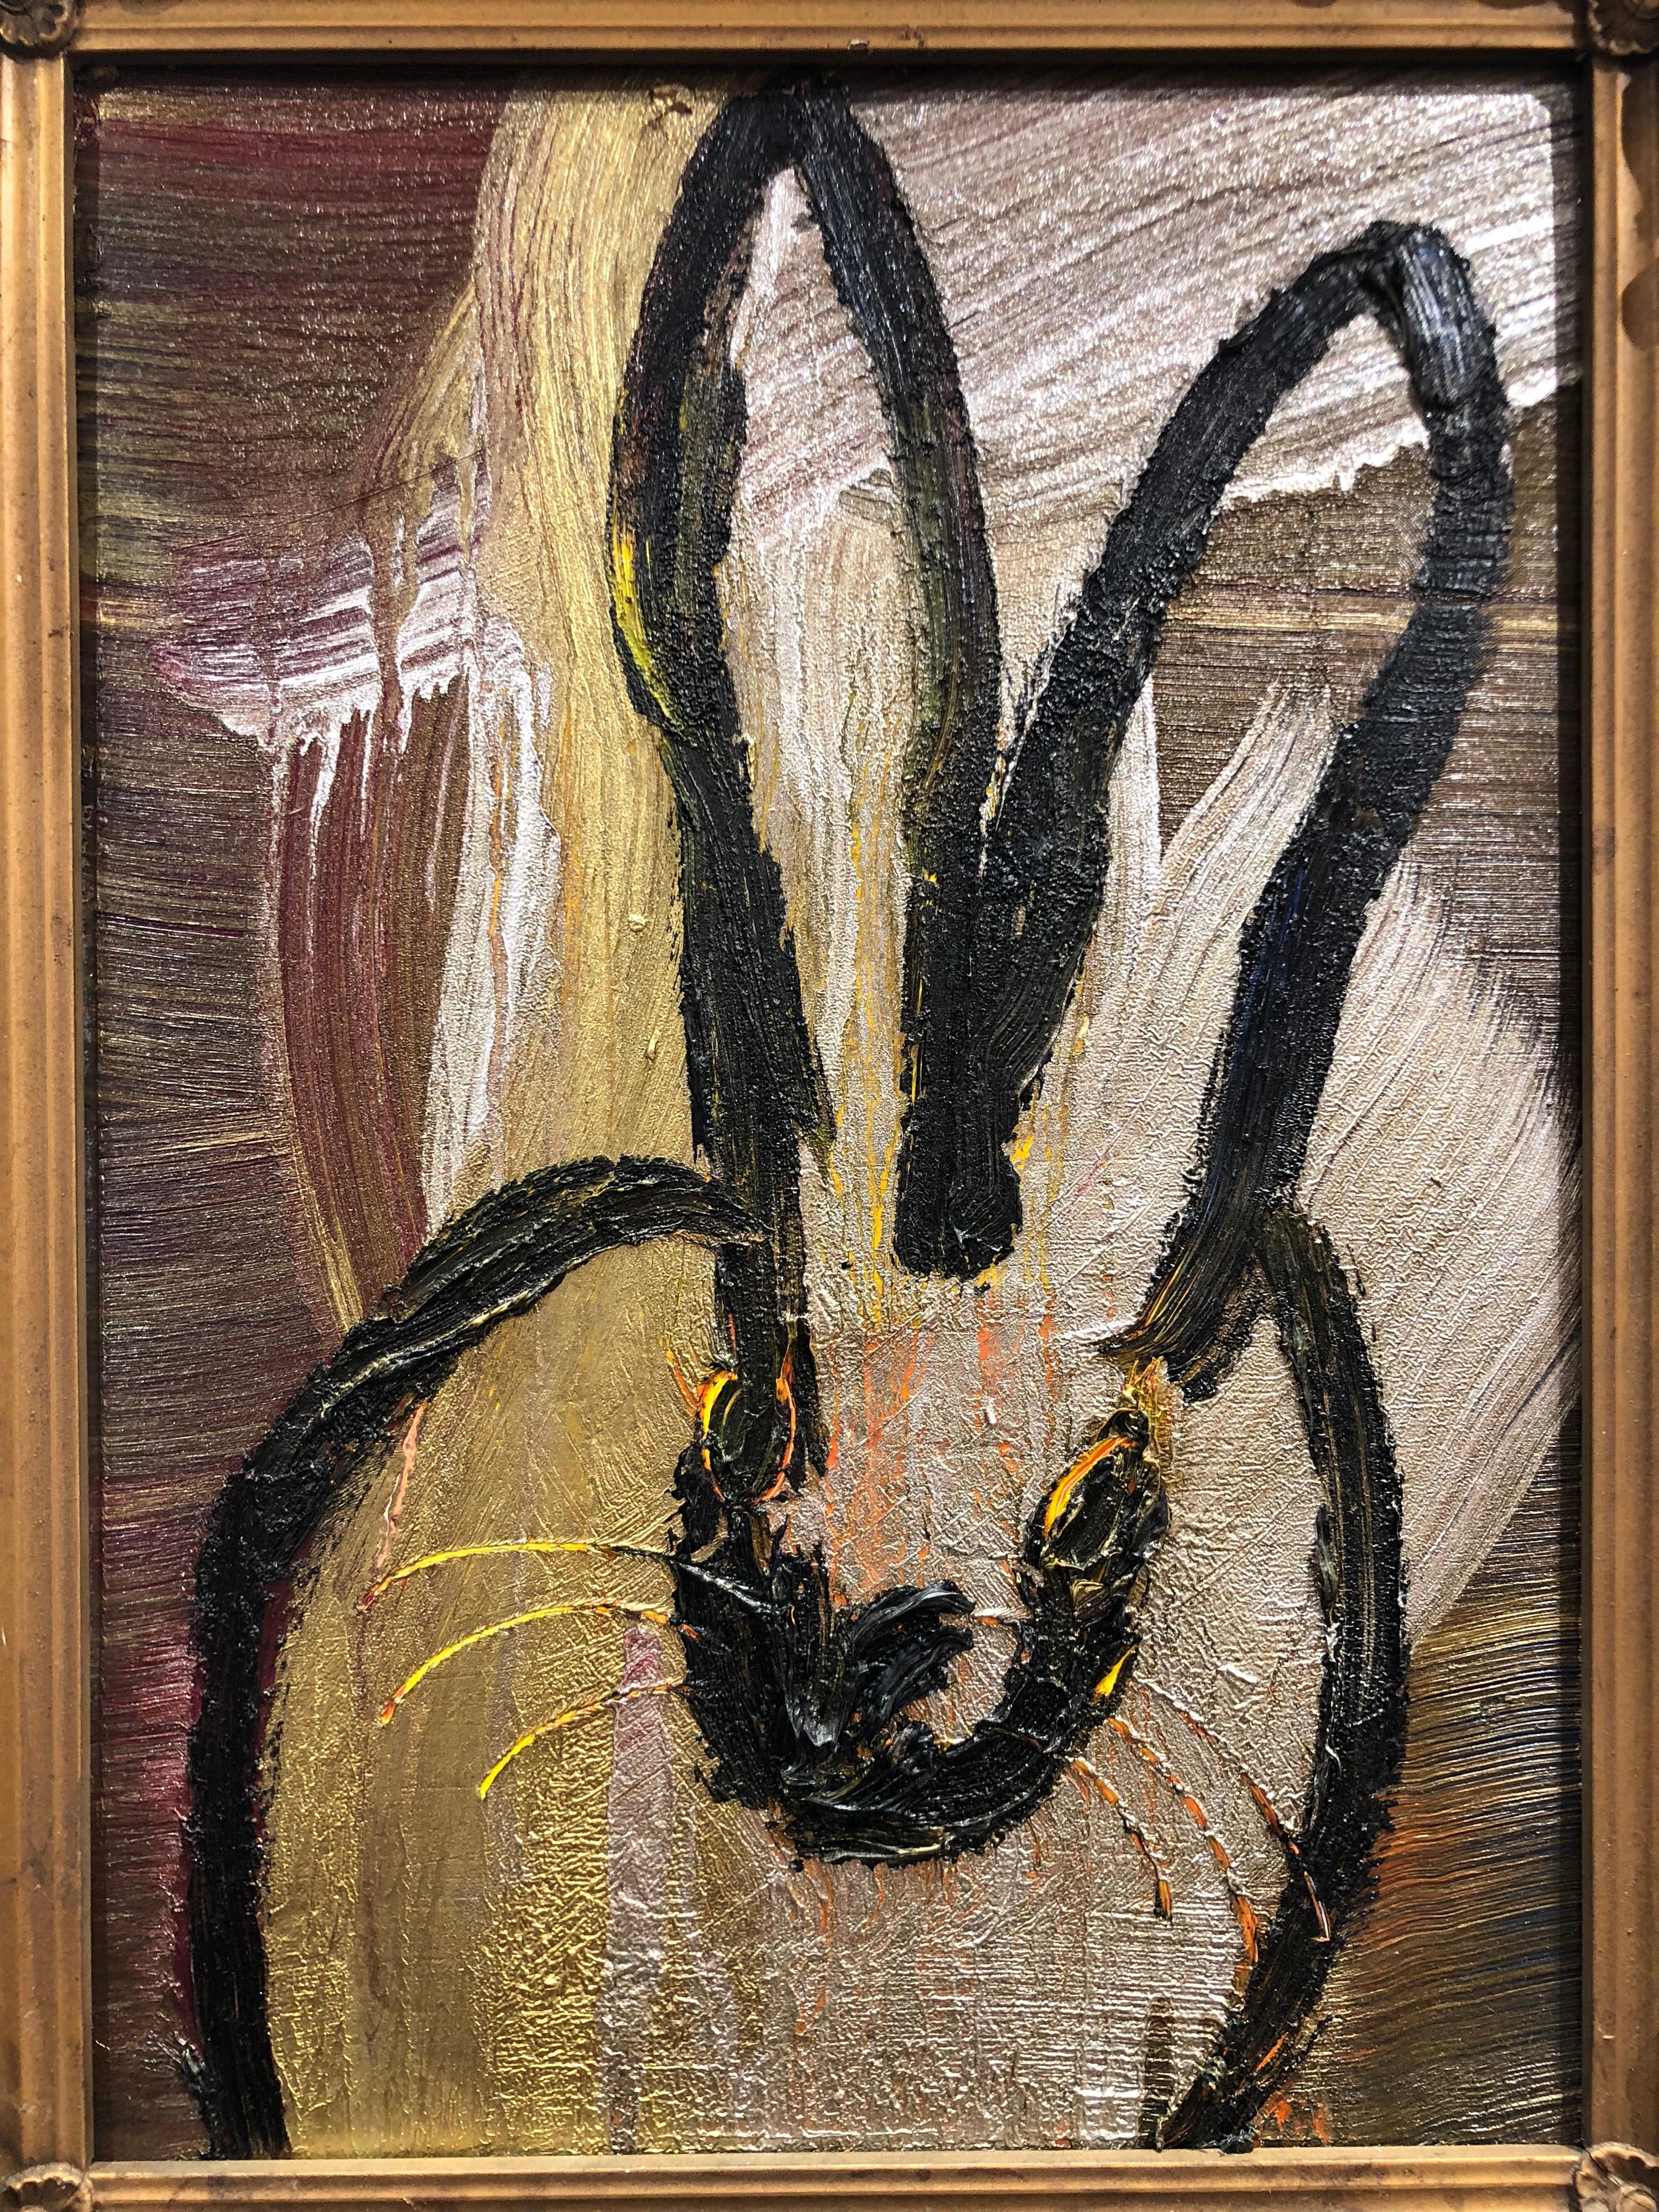 Artist:  Slonem, Hunt
Title:  Silver & Gold Bunny
Series:  Bunnies
Date:  2018
Medium:  Oil on panel
Unframed Dimensions:  18